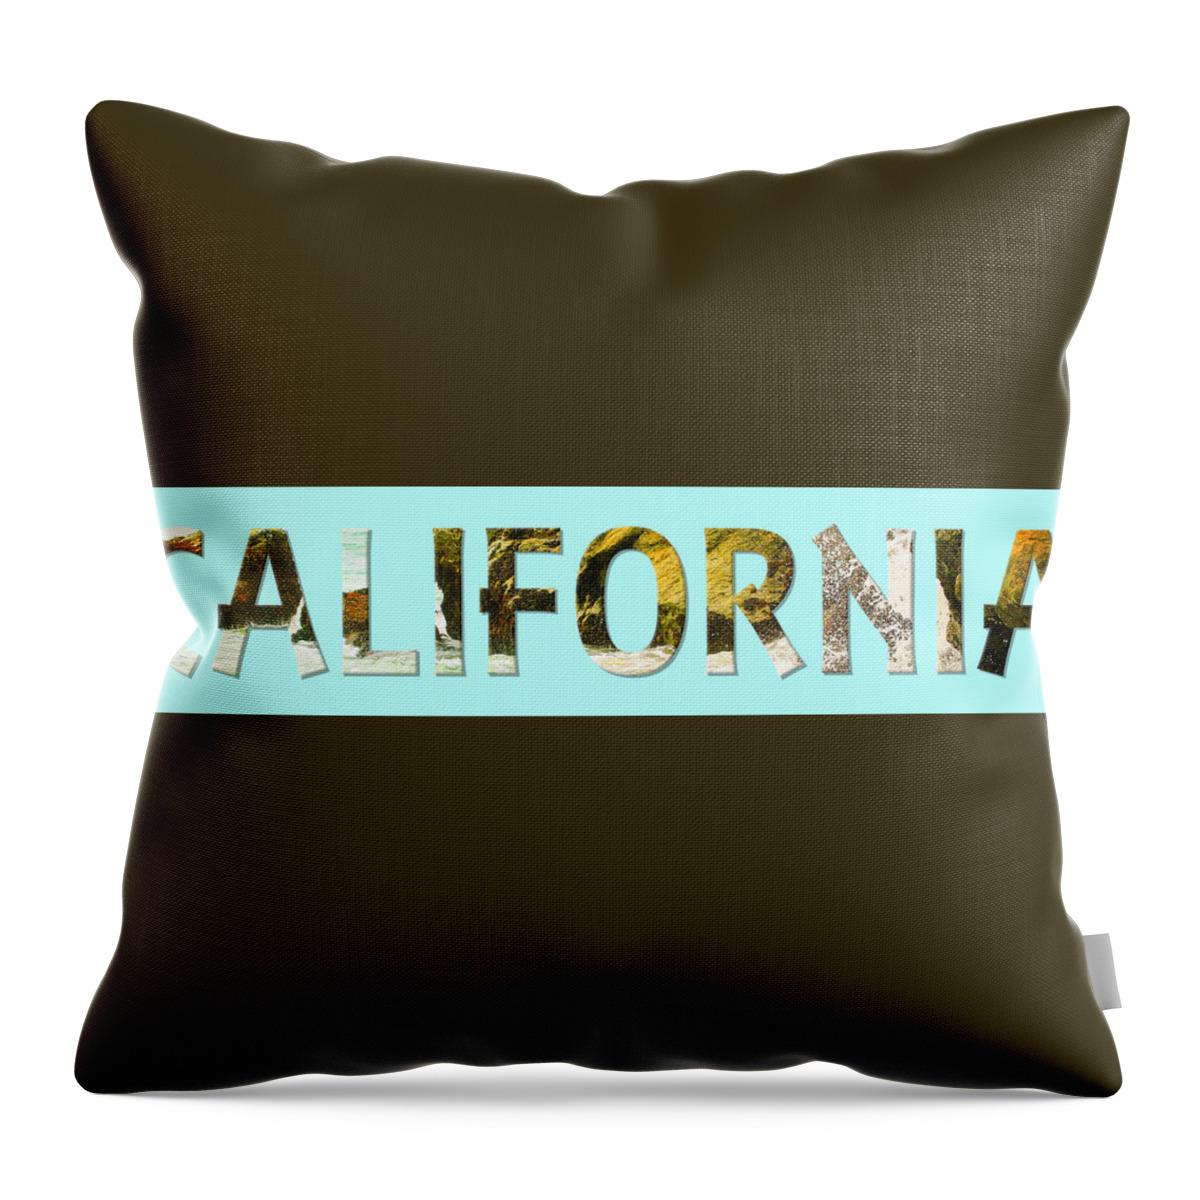 California Throw Pillow featuring the digital art California Word Art by Marilyn Hunt